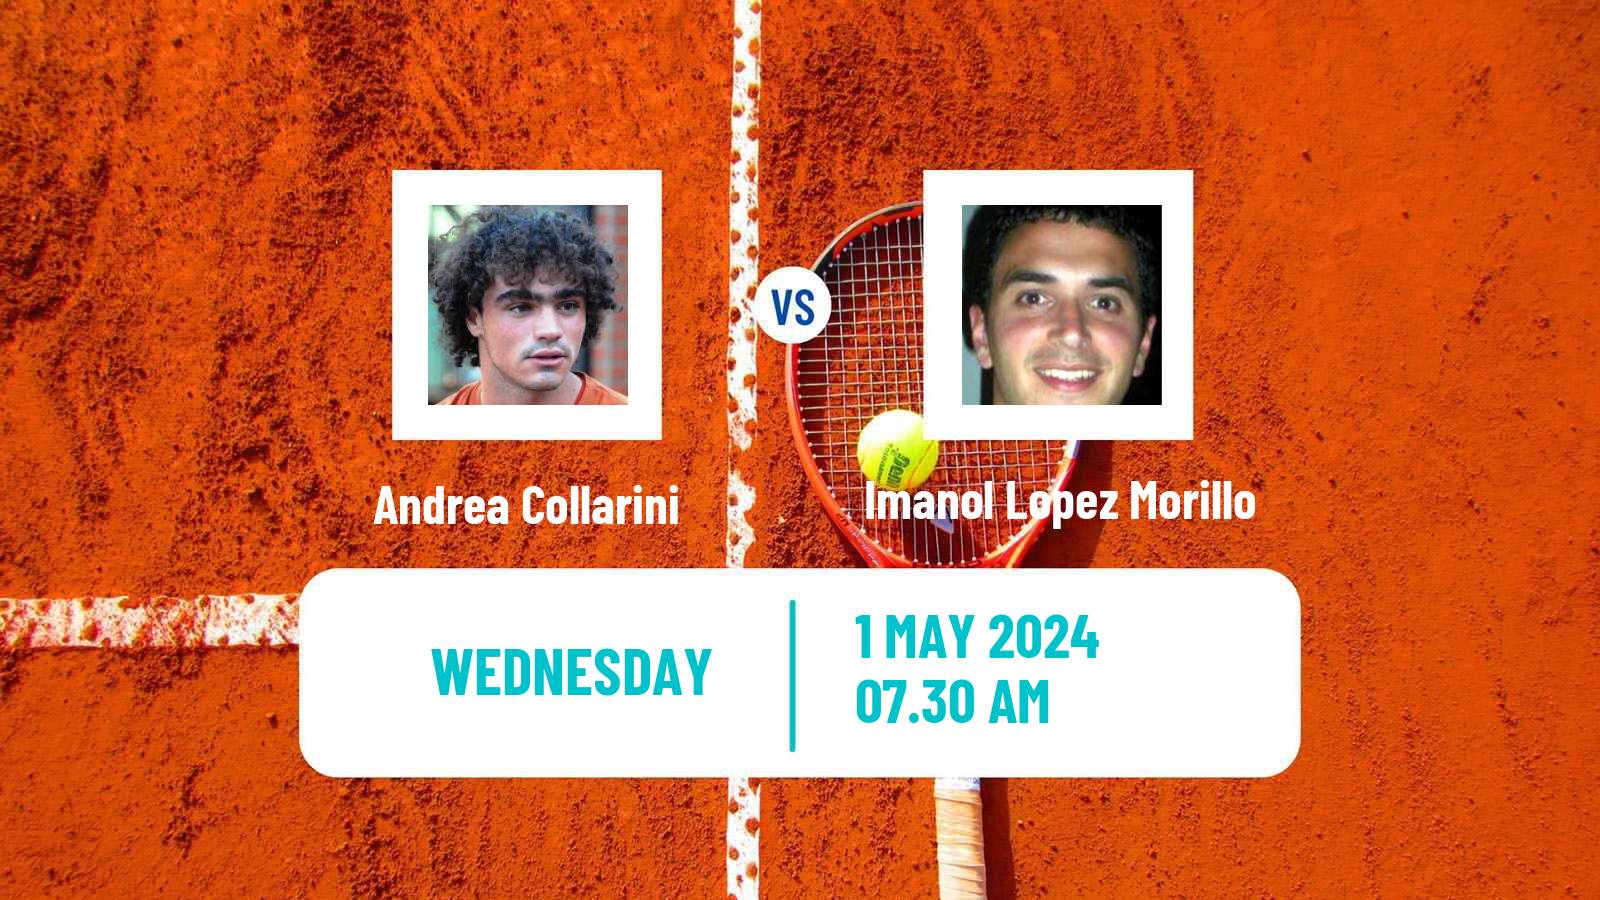 Tennis ITF M25 Sabadell Men Andrea Collarini - Imanol Lopez Morillo